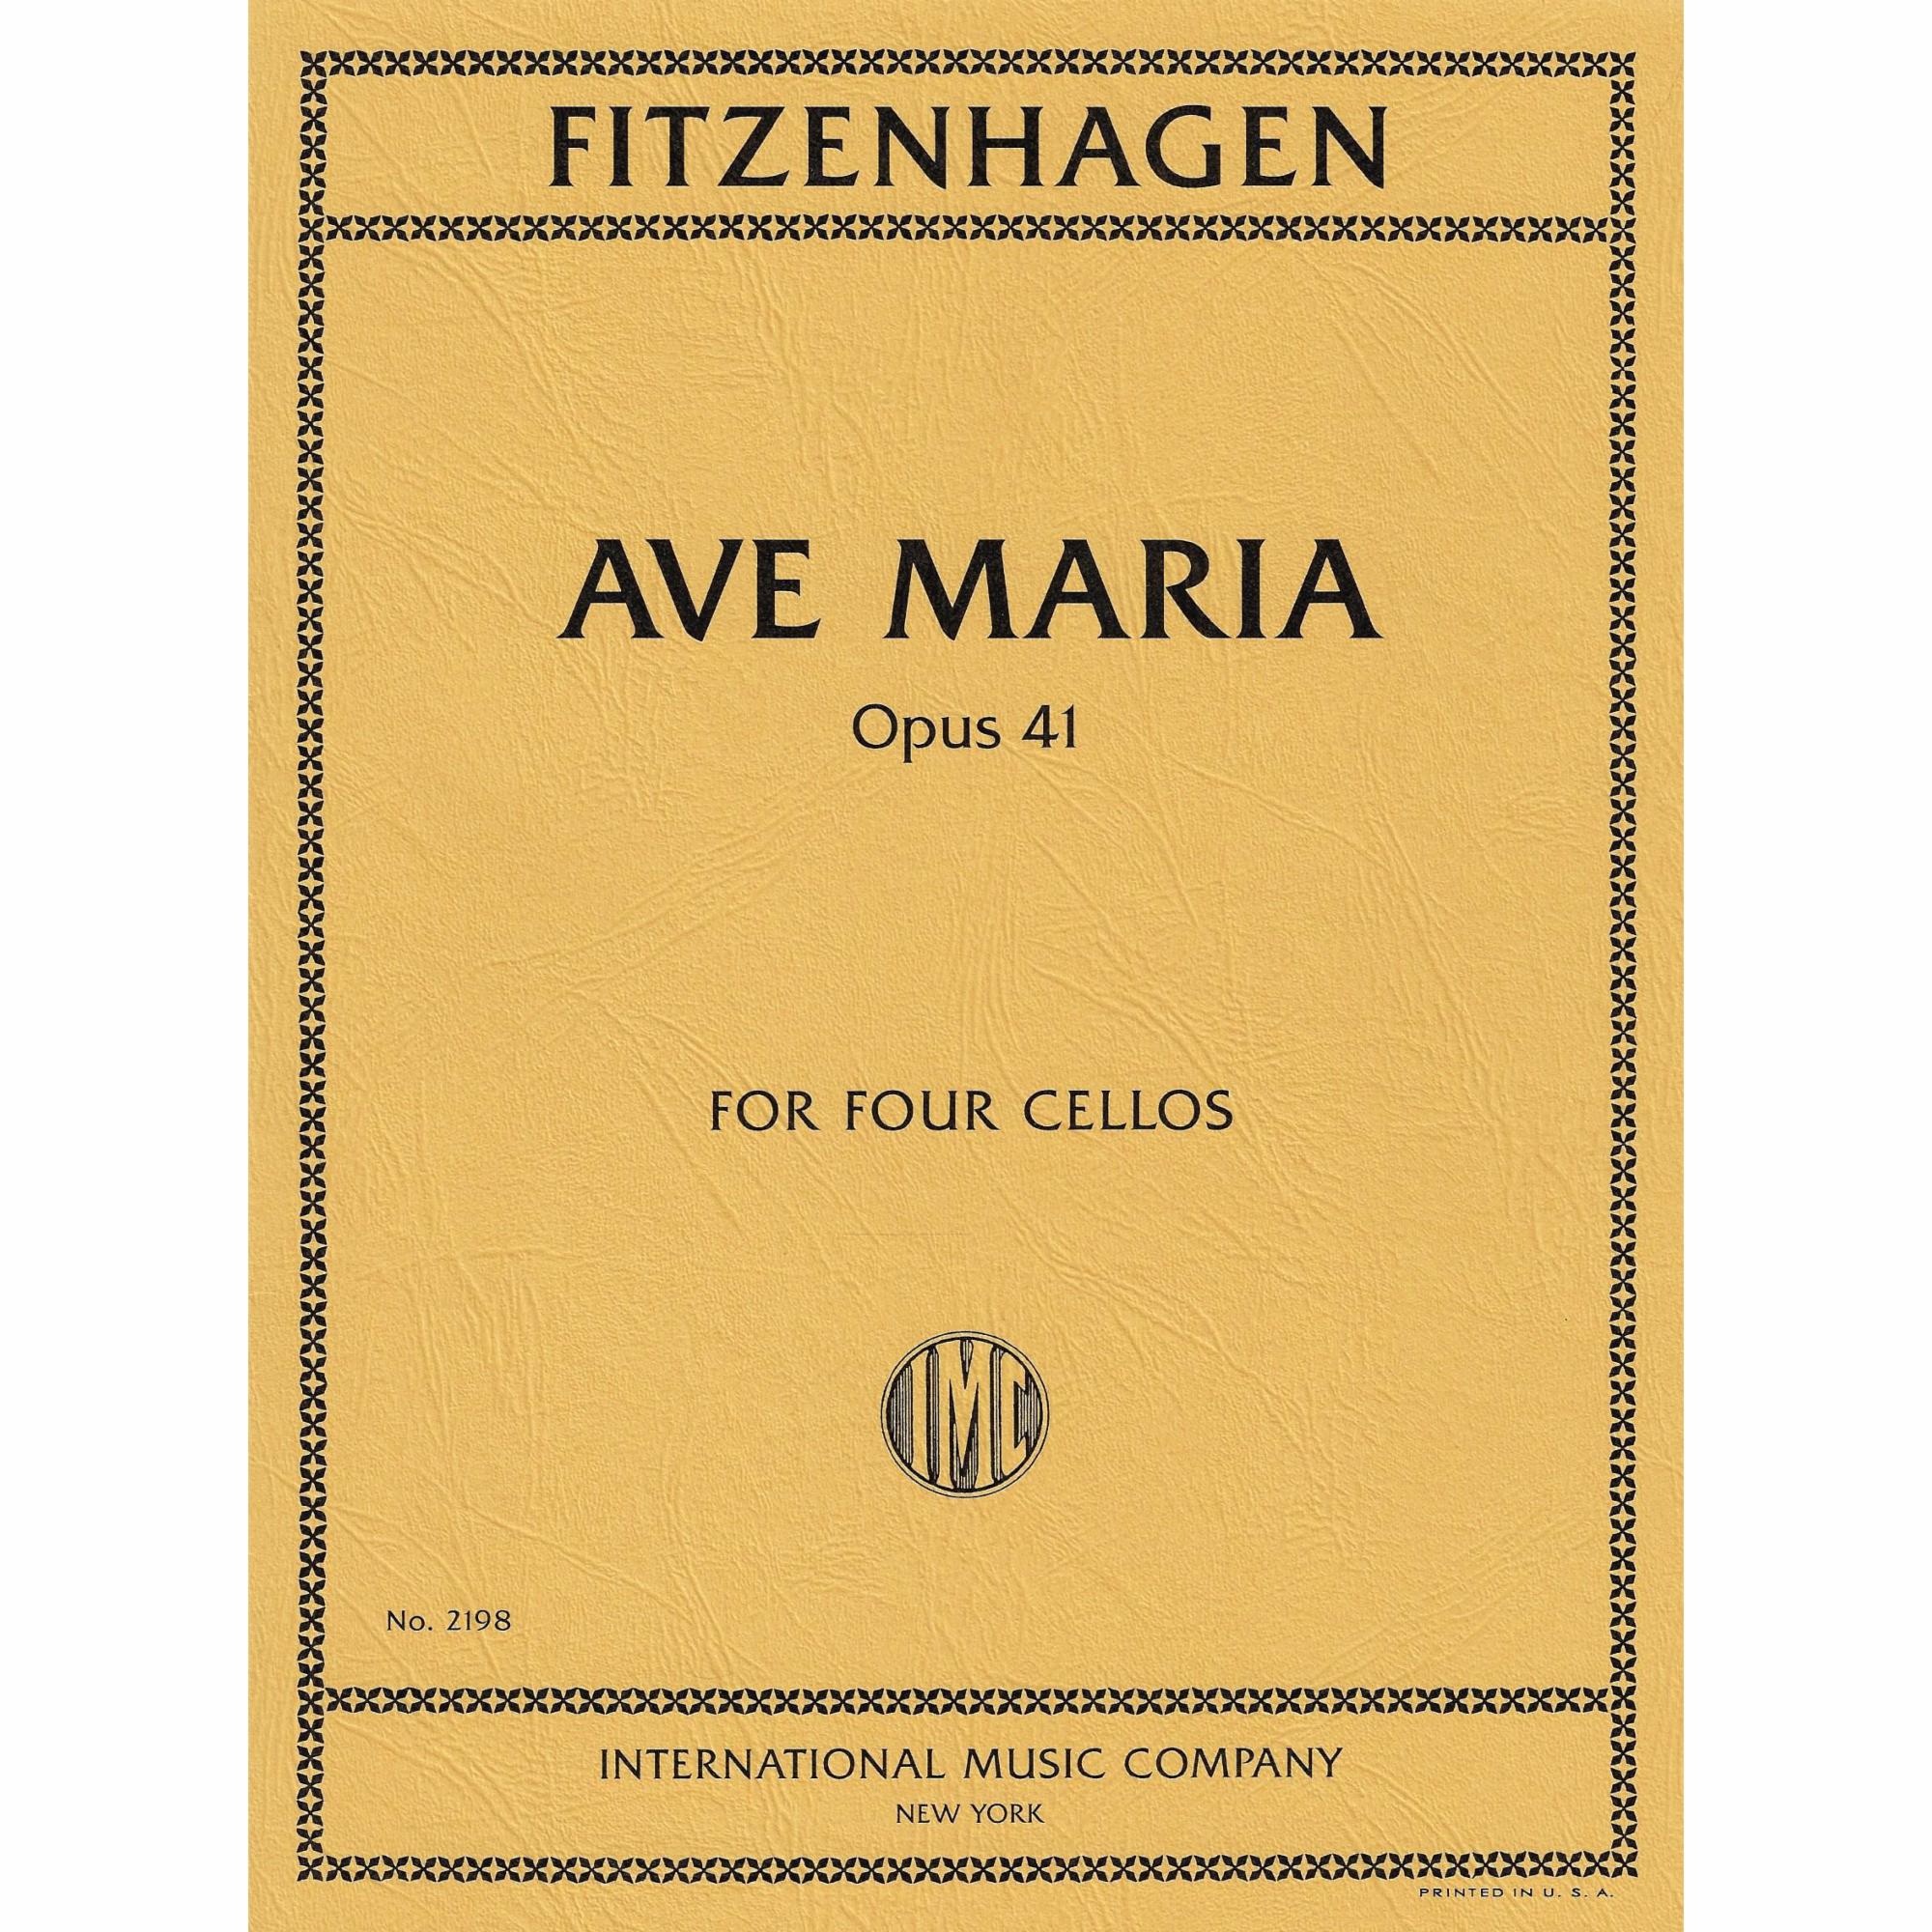 Fitzenhagan -- Ave Maria, Op. 41 for Four Cellos